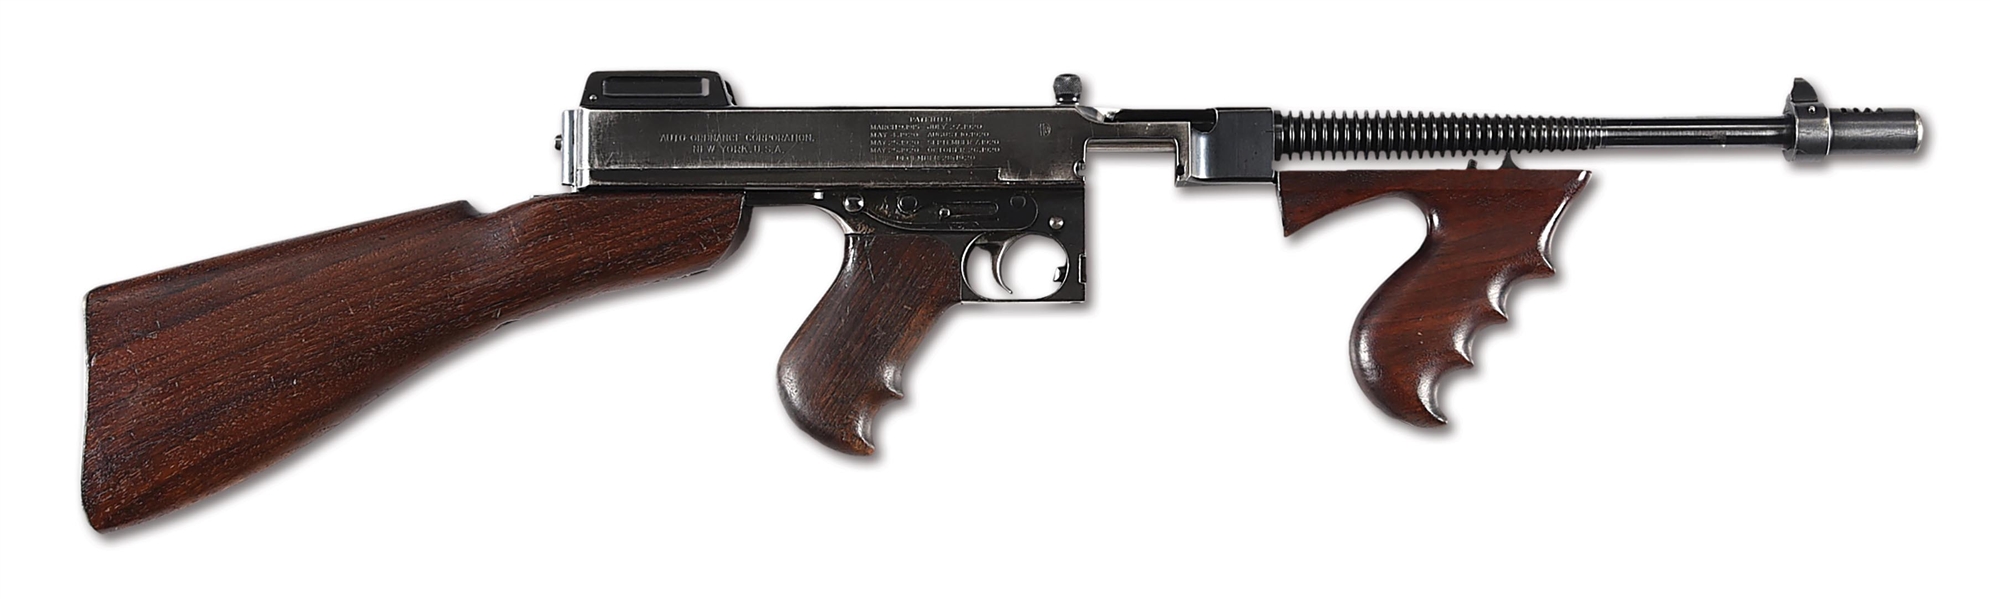 (N) ESPECIALLY ATTRACTIVE FLINT MICHIGAN POLICE OWNED COLT 1921AC THOMPSON MACHINE GUN (CURIO & RELIC).